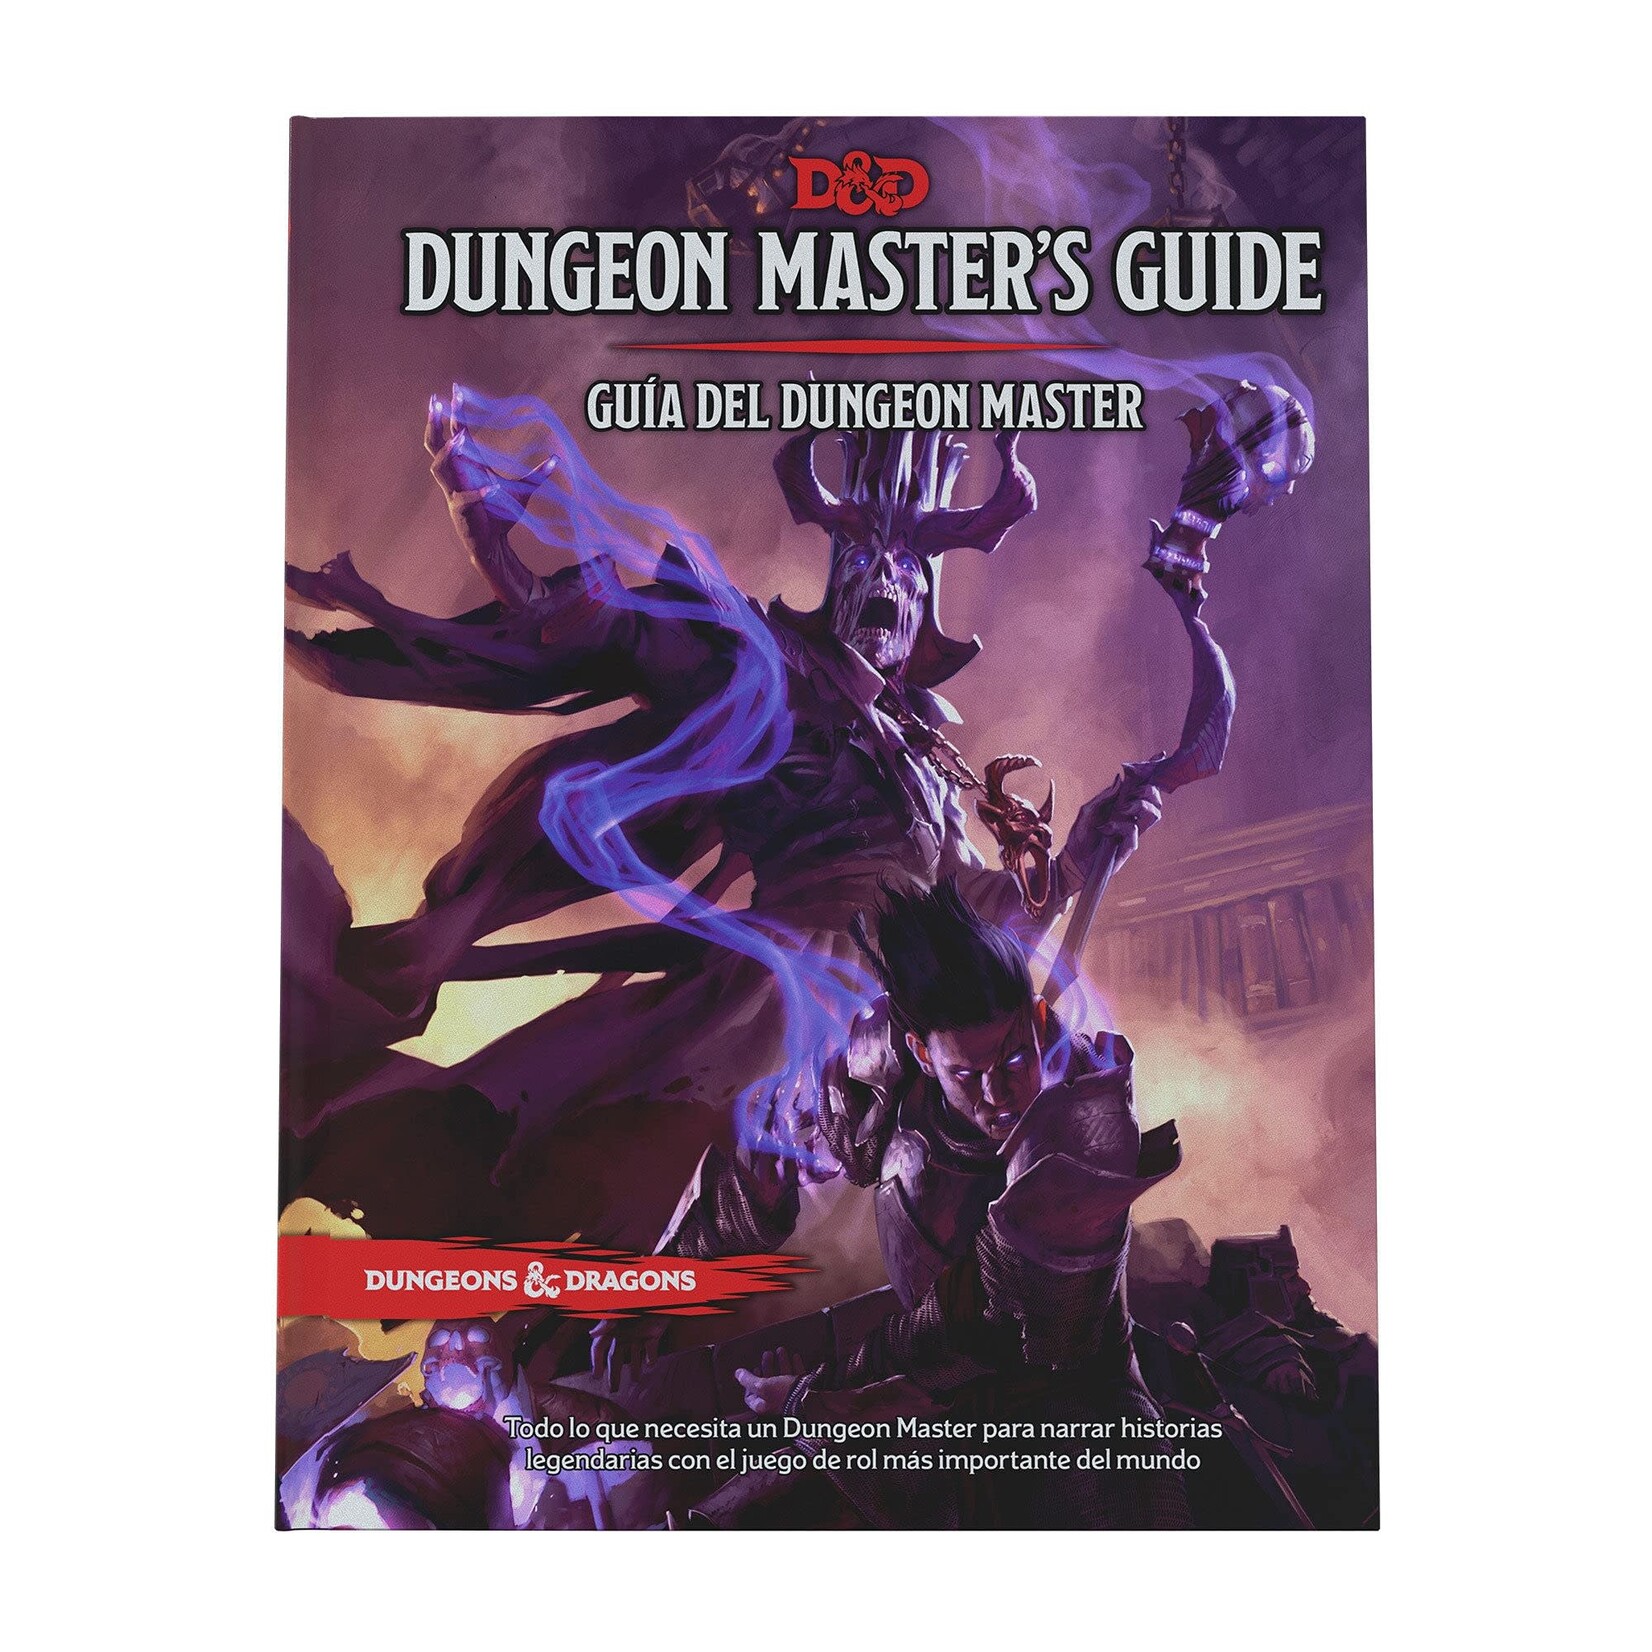 Dungeons & Dragons RPG Dungeon Master's Guide english